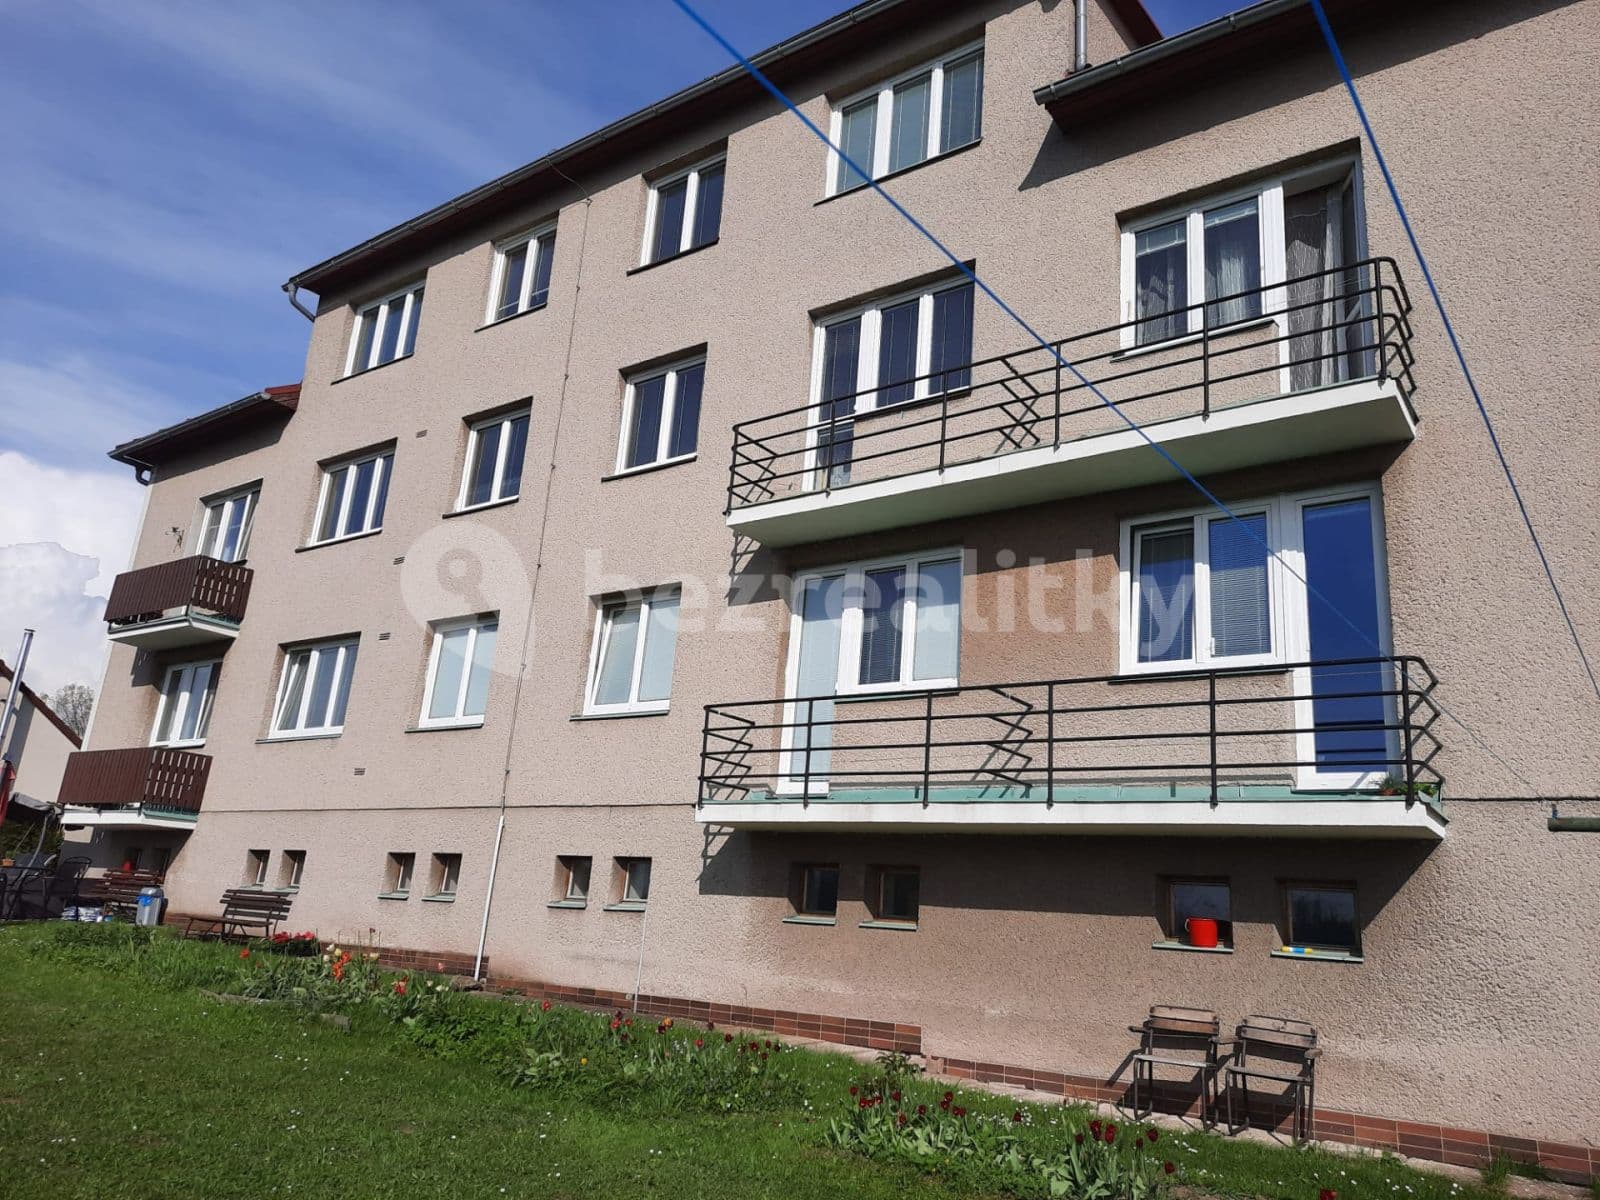 3 bedroom flat for sale, 72 m², Roztoky u Jilemnice, Liberecký Region